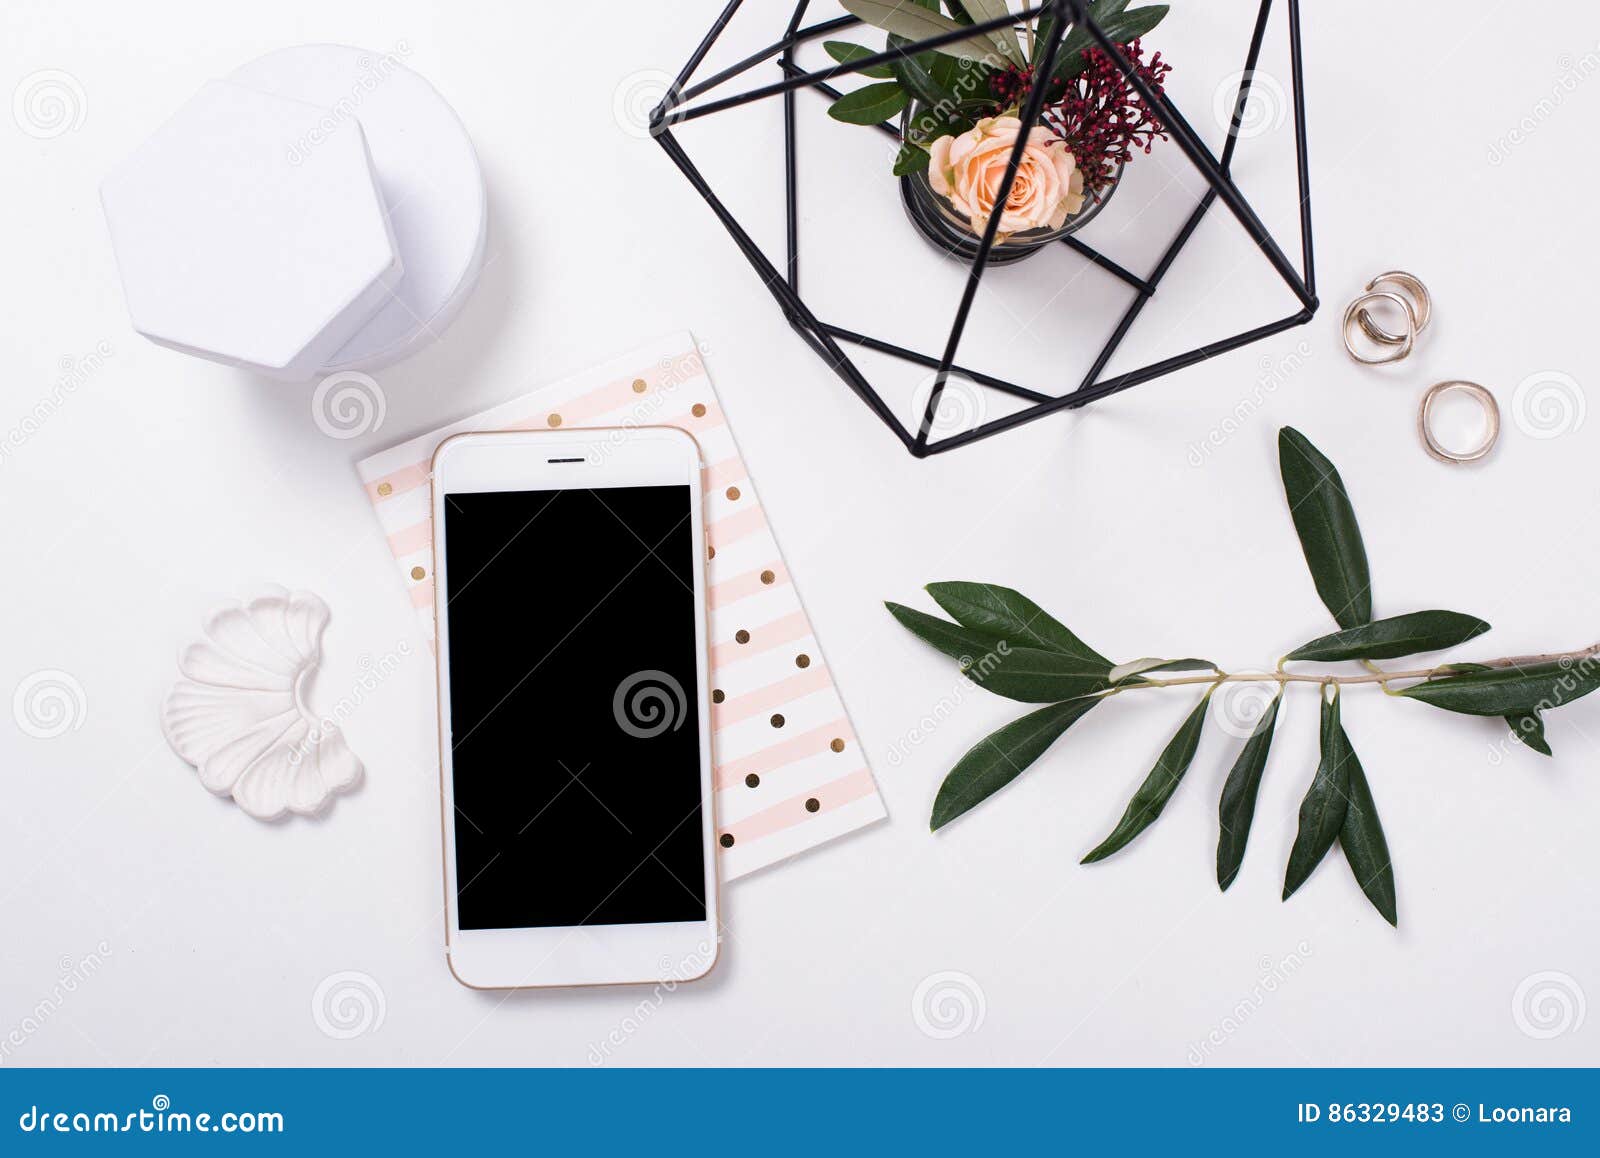 feminine tabletop flatlay with smartphone mock-up